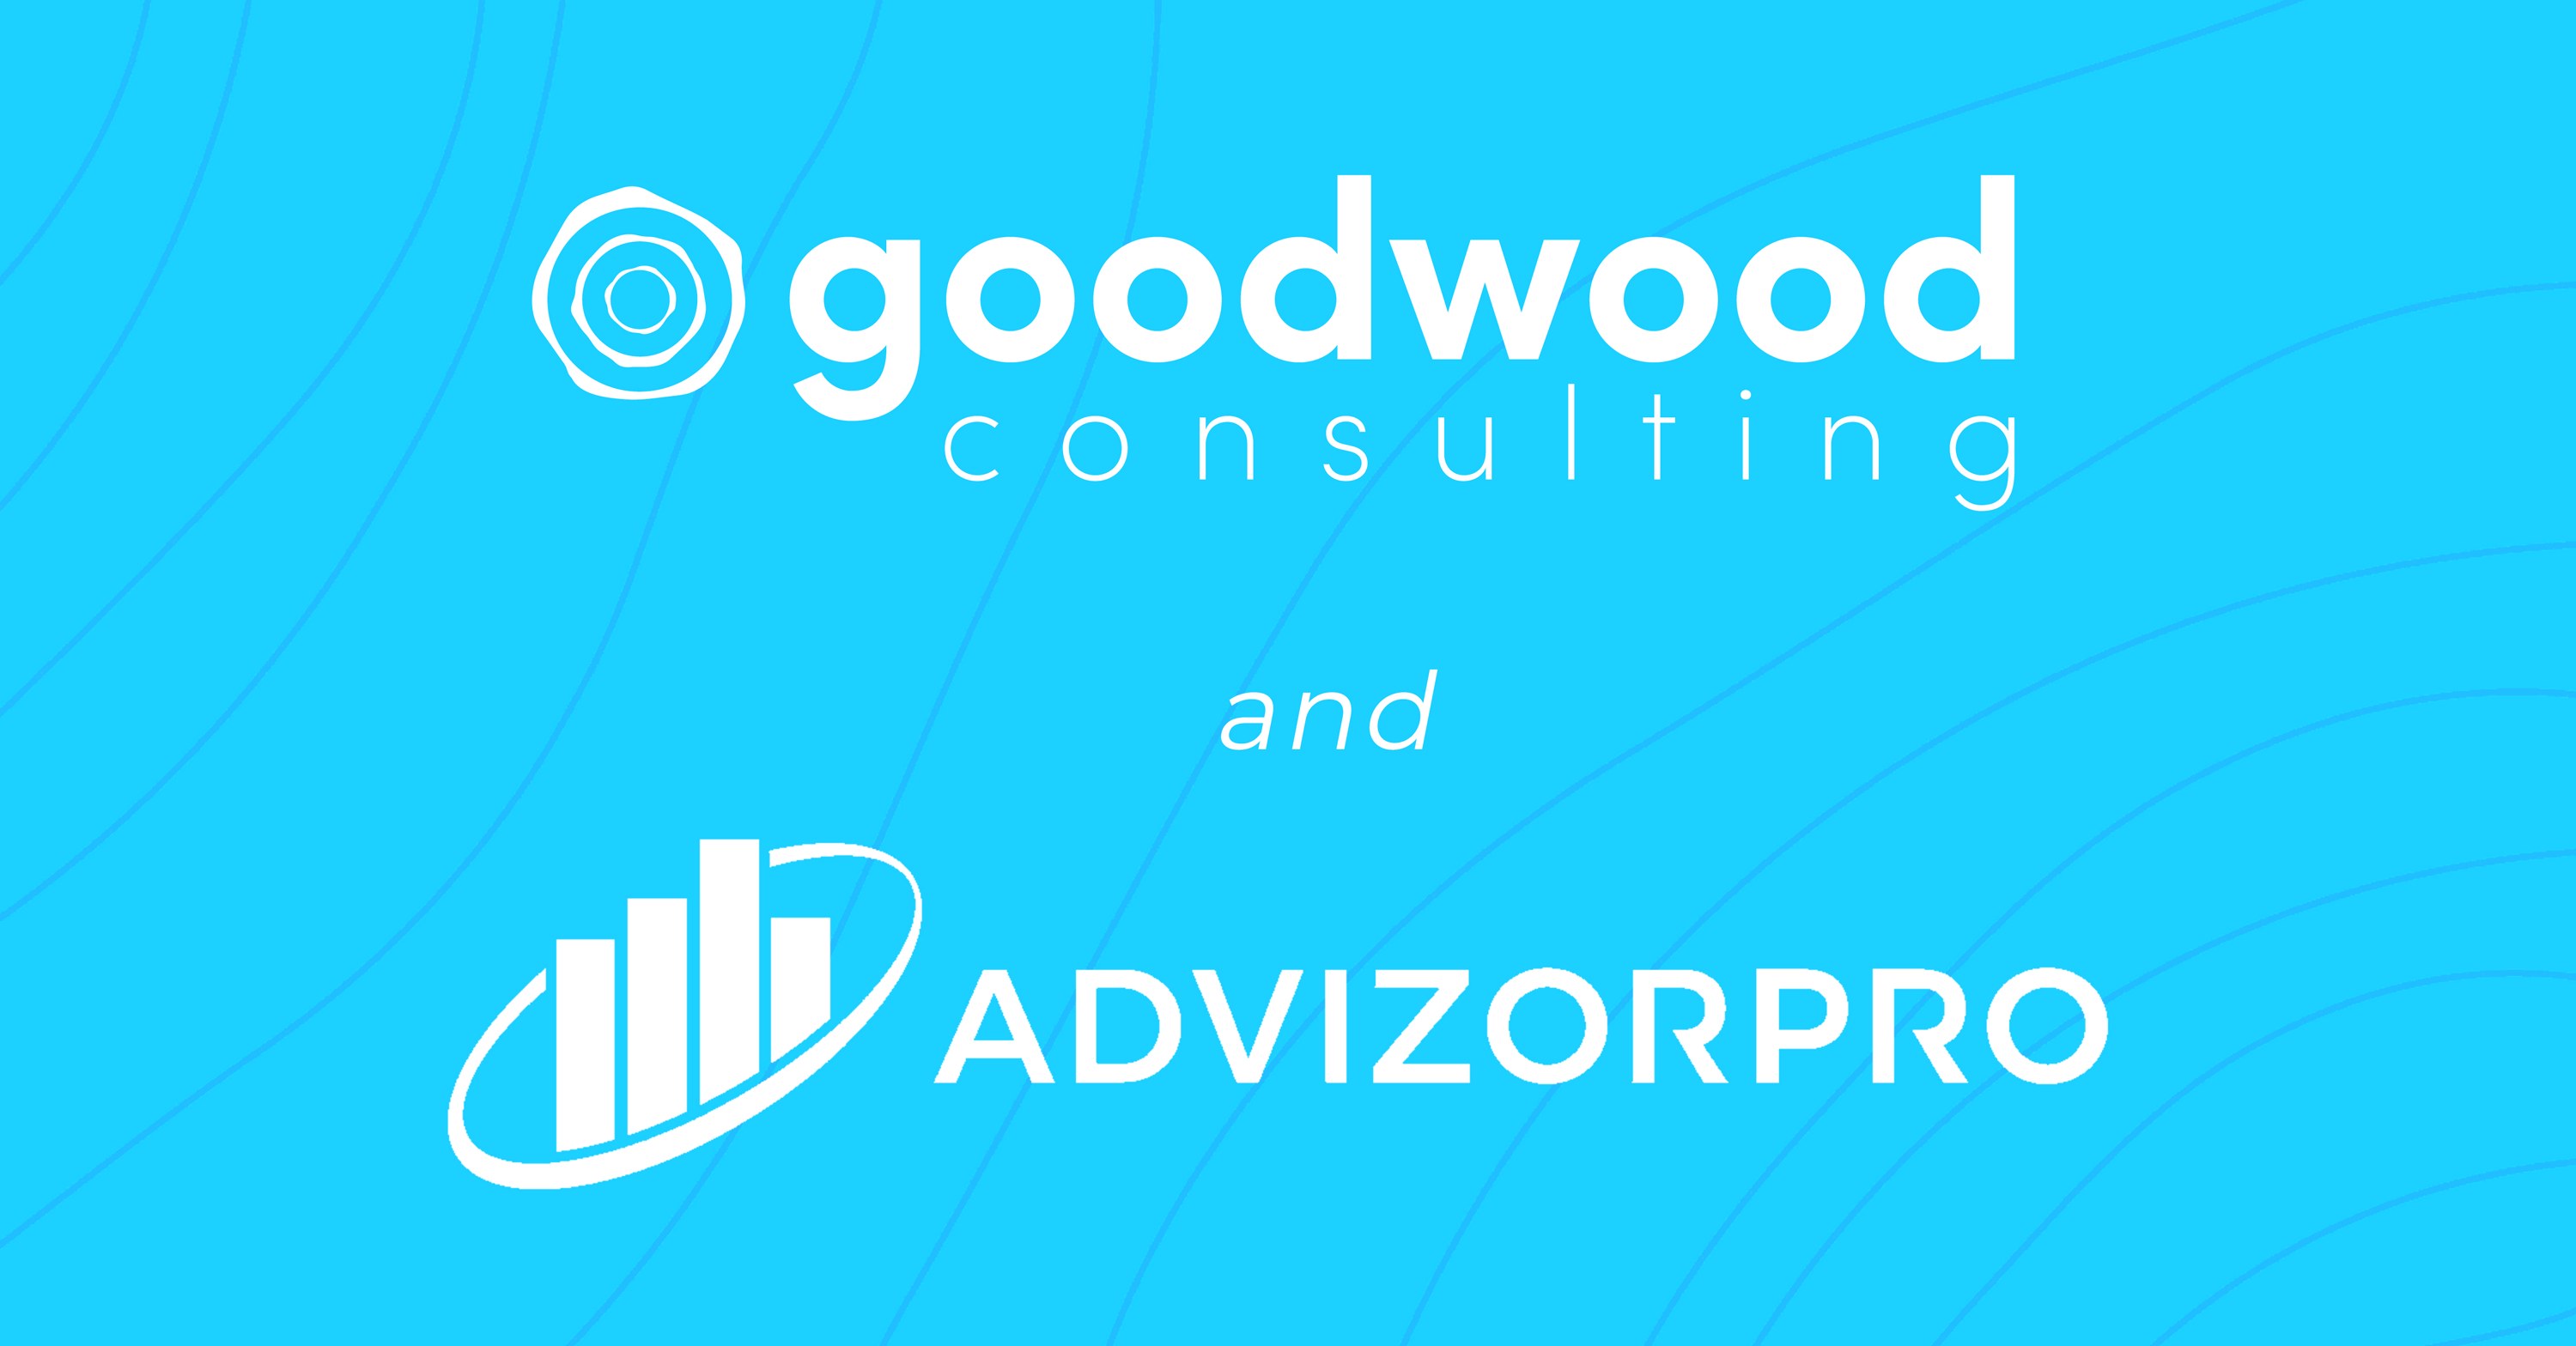 Goodwood and AdvizorPro Announce Strategic Partnership